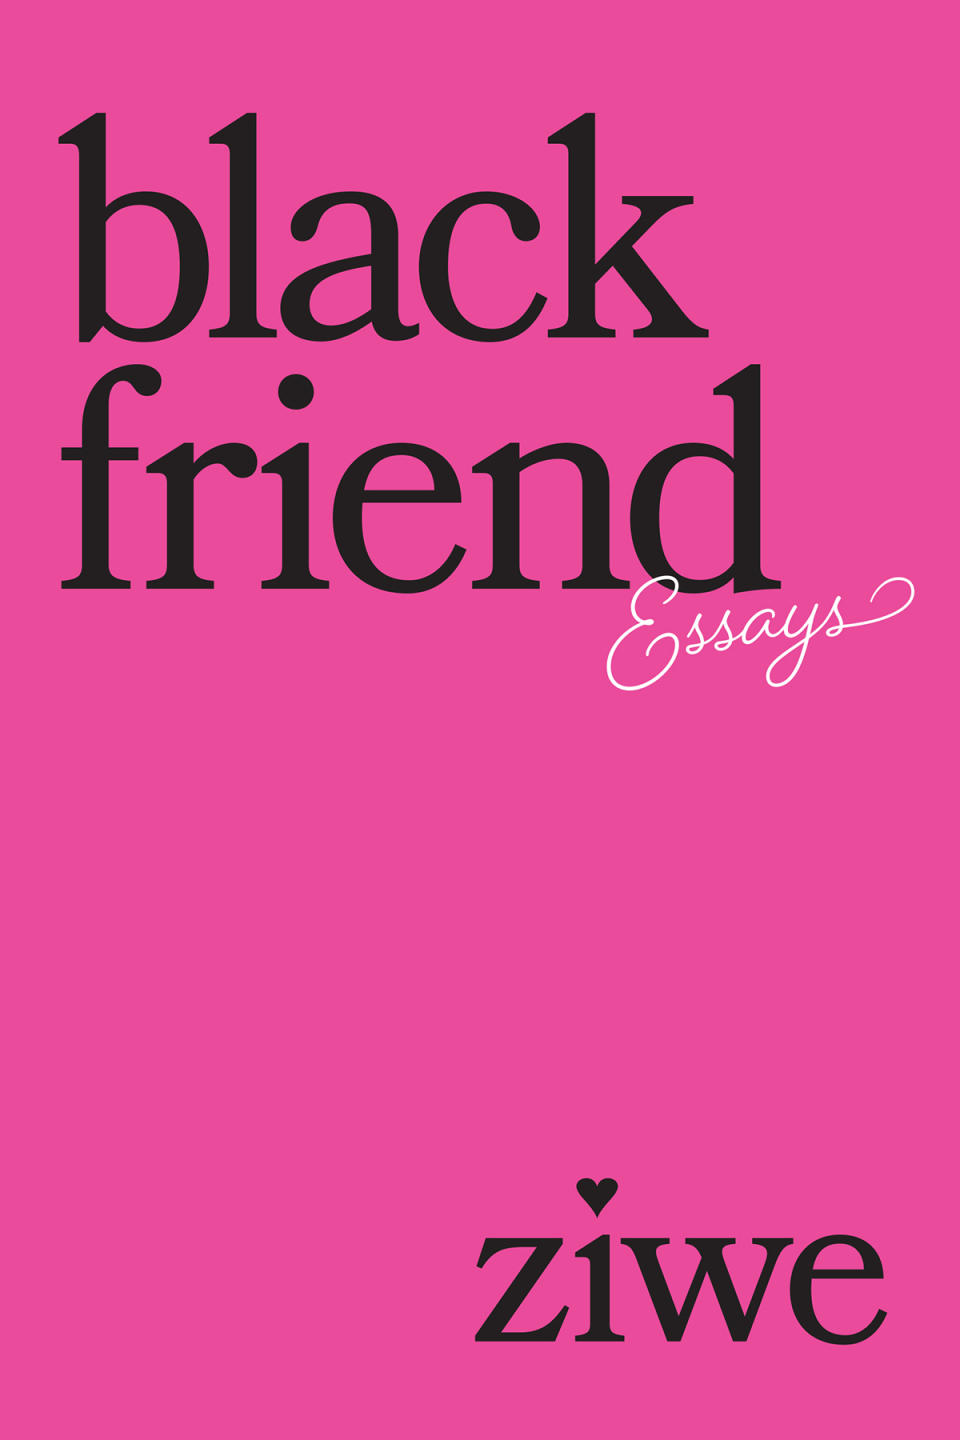 ziwe book black friend essays